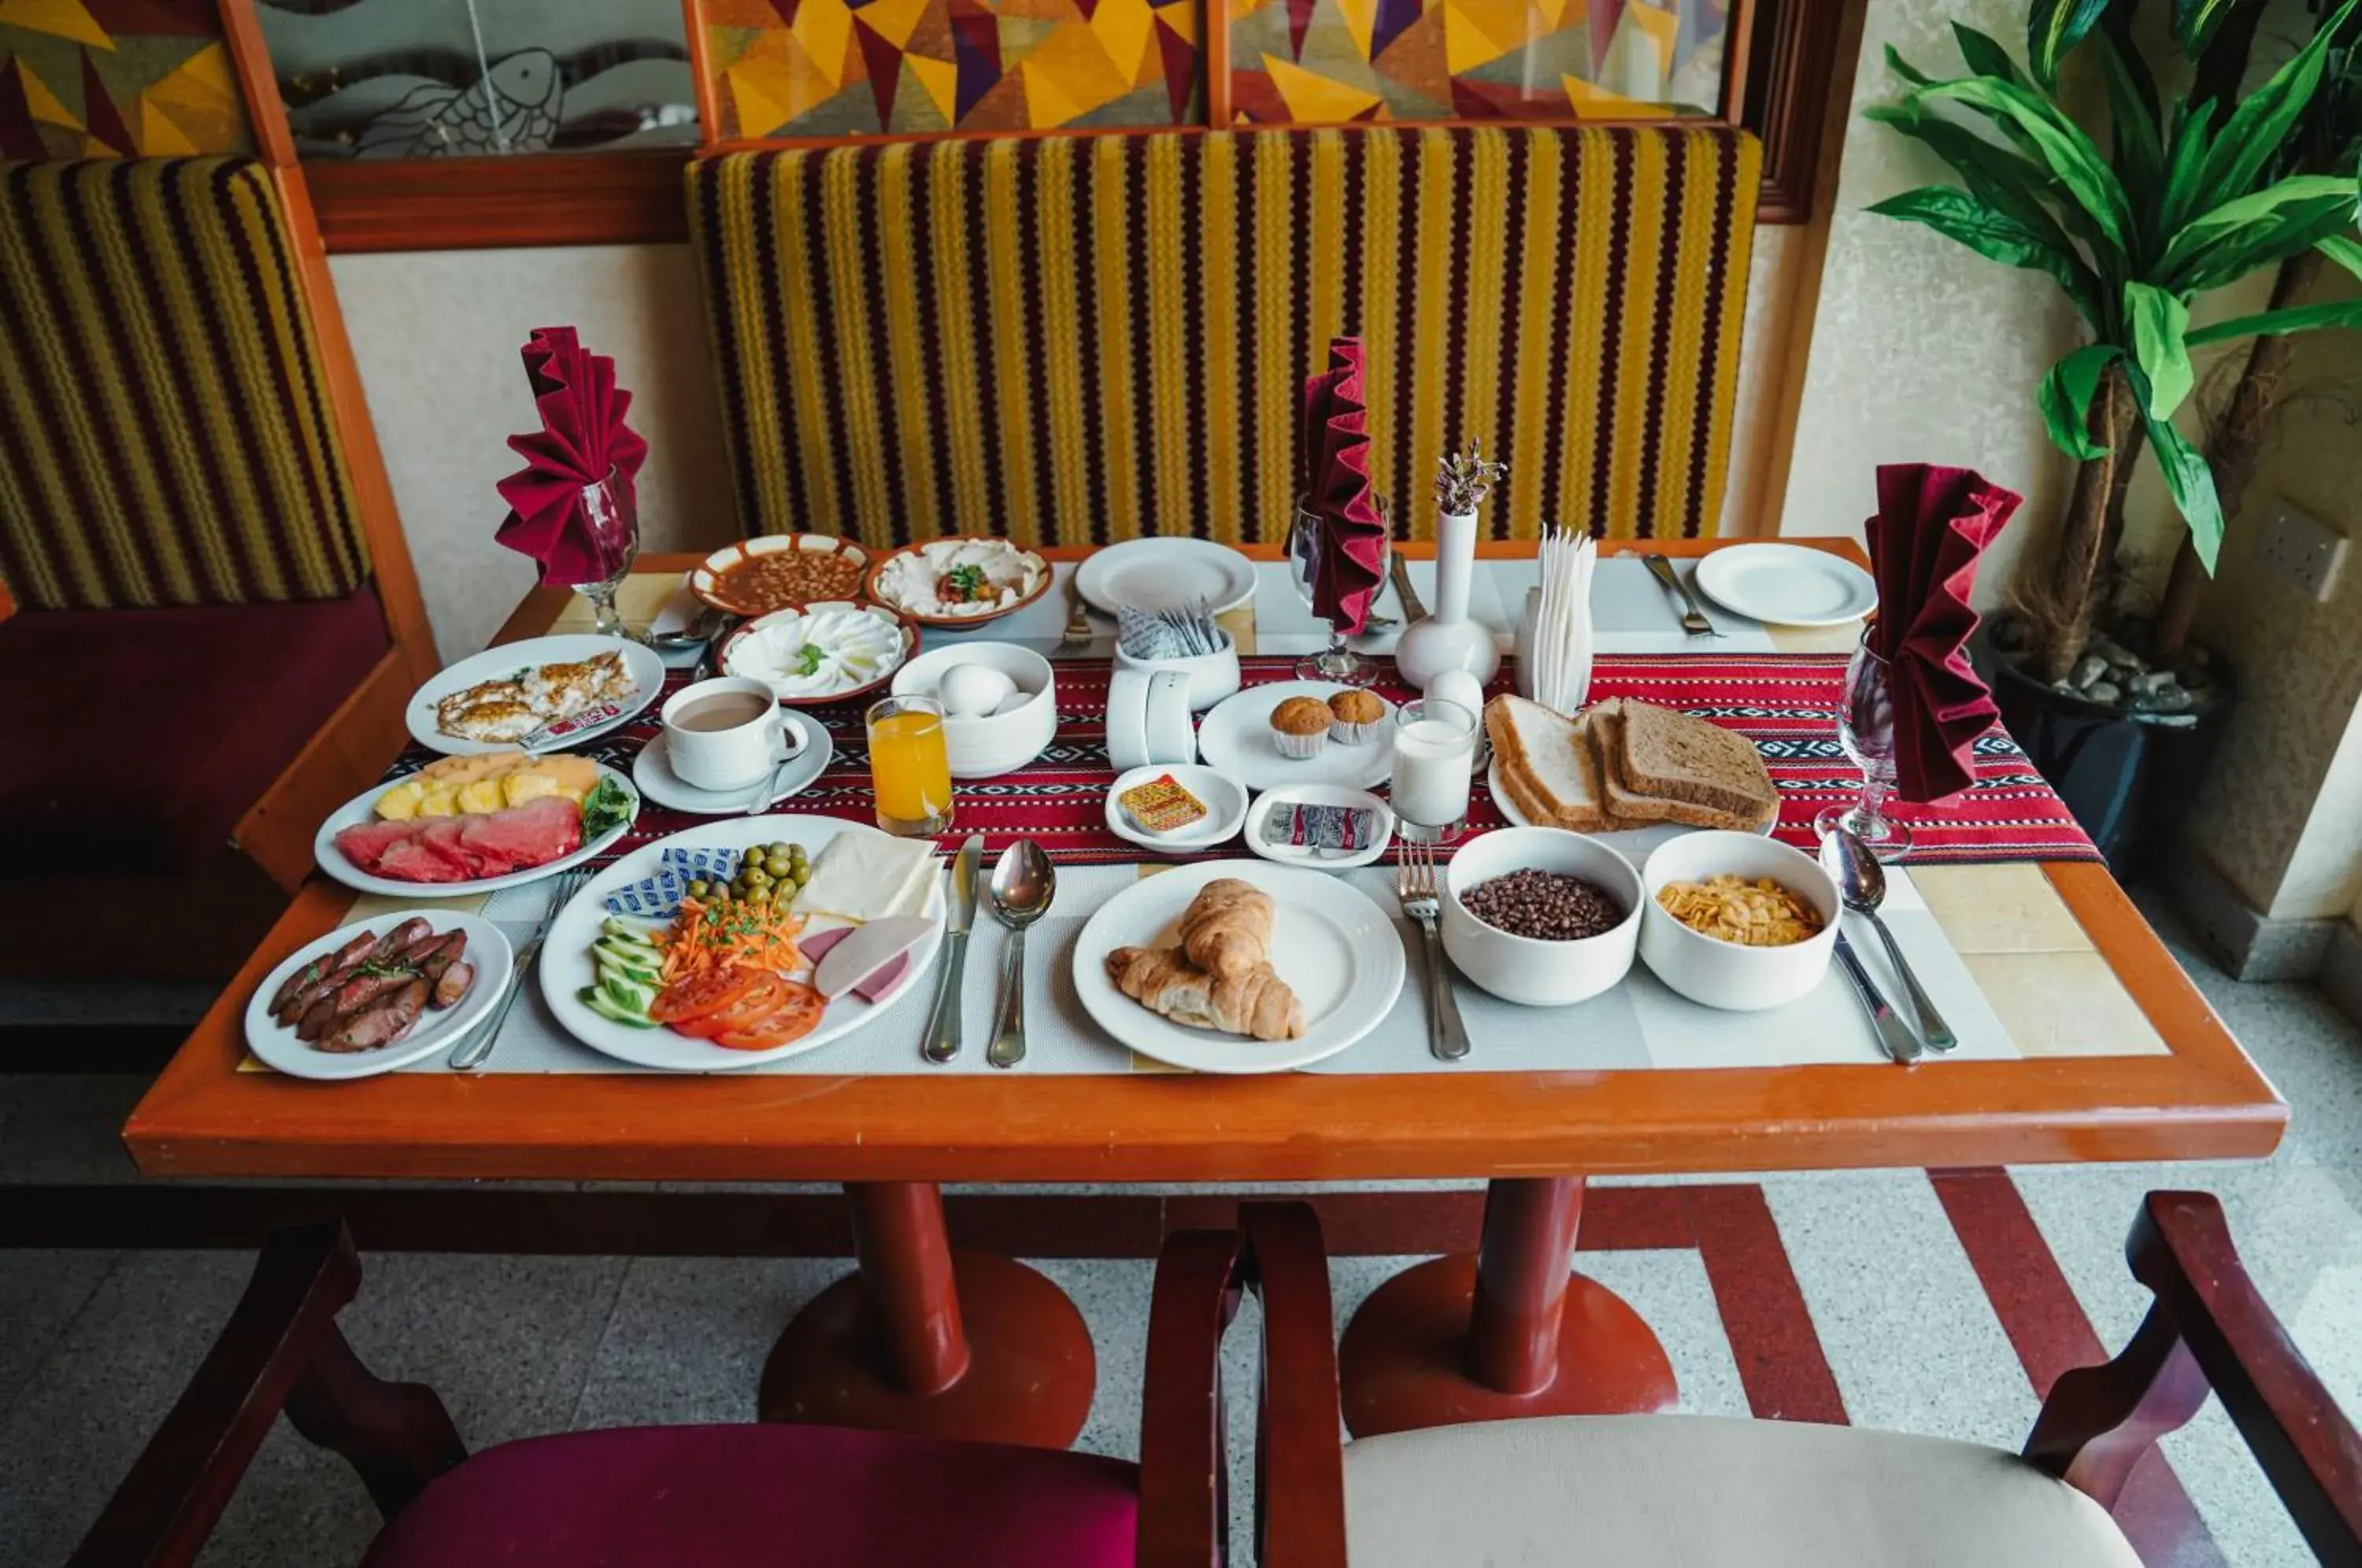 Breakfast in Safeer International Hotel